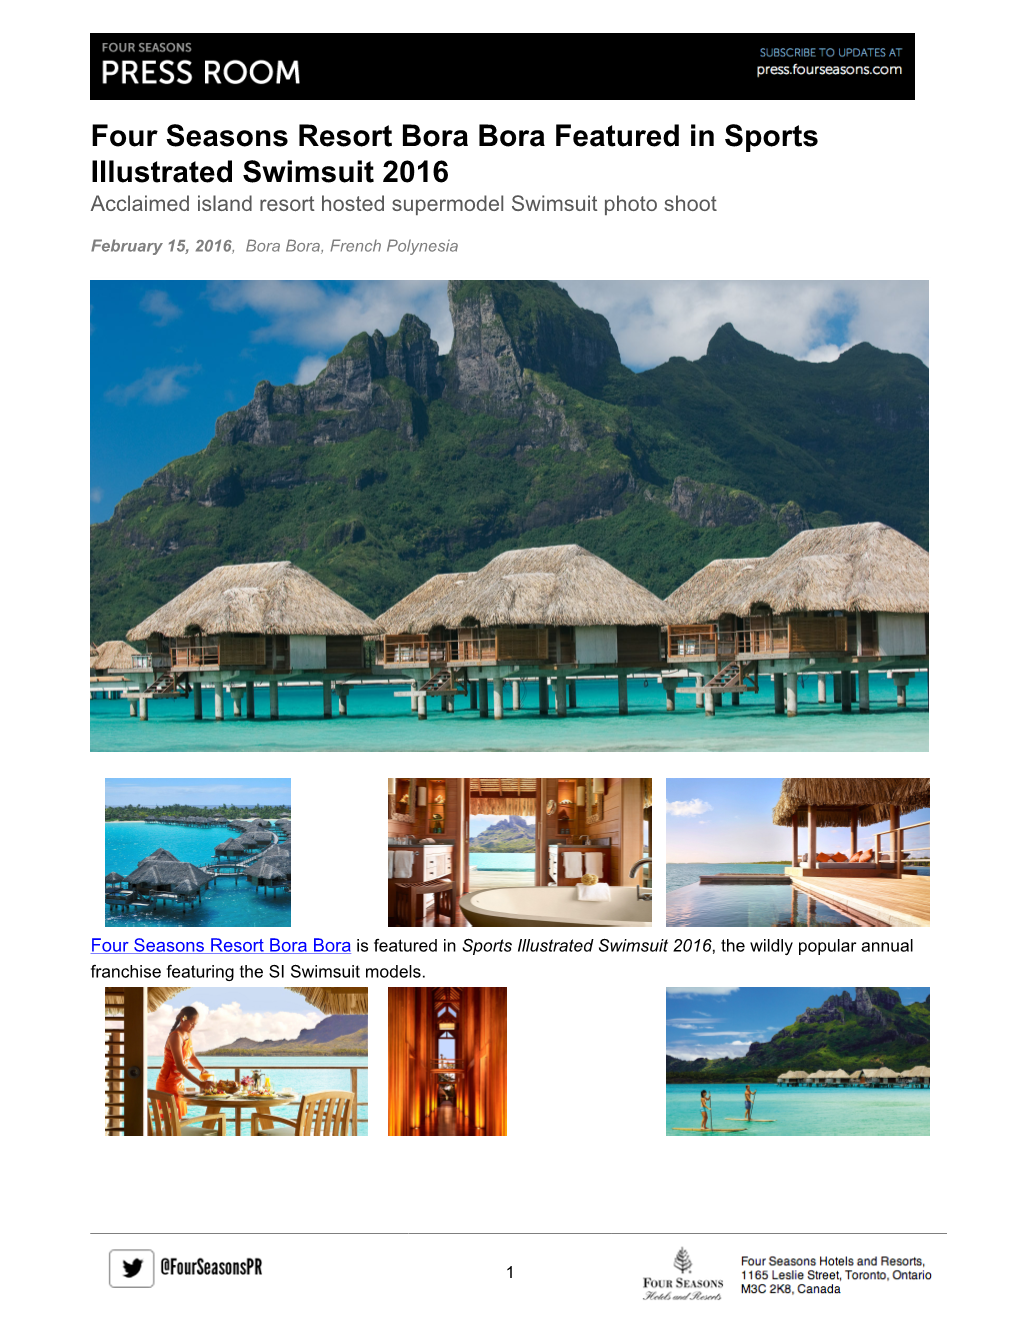 Four Seasons Resort Bora Bora Featured in Sports Illustrated Swimsuit 2016 Acclaimed Island Resort Hosted Supermodel Swimsuit Photo Shoot